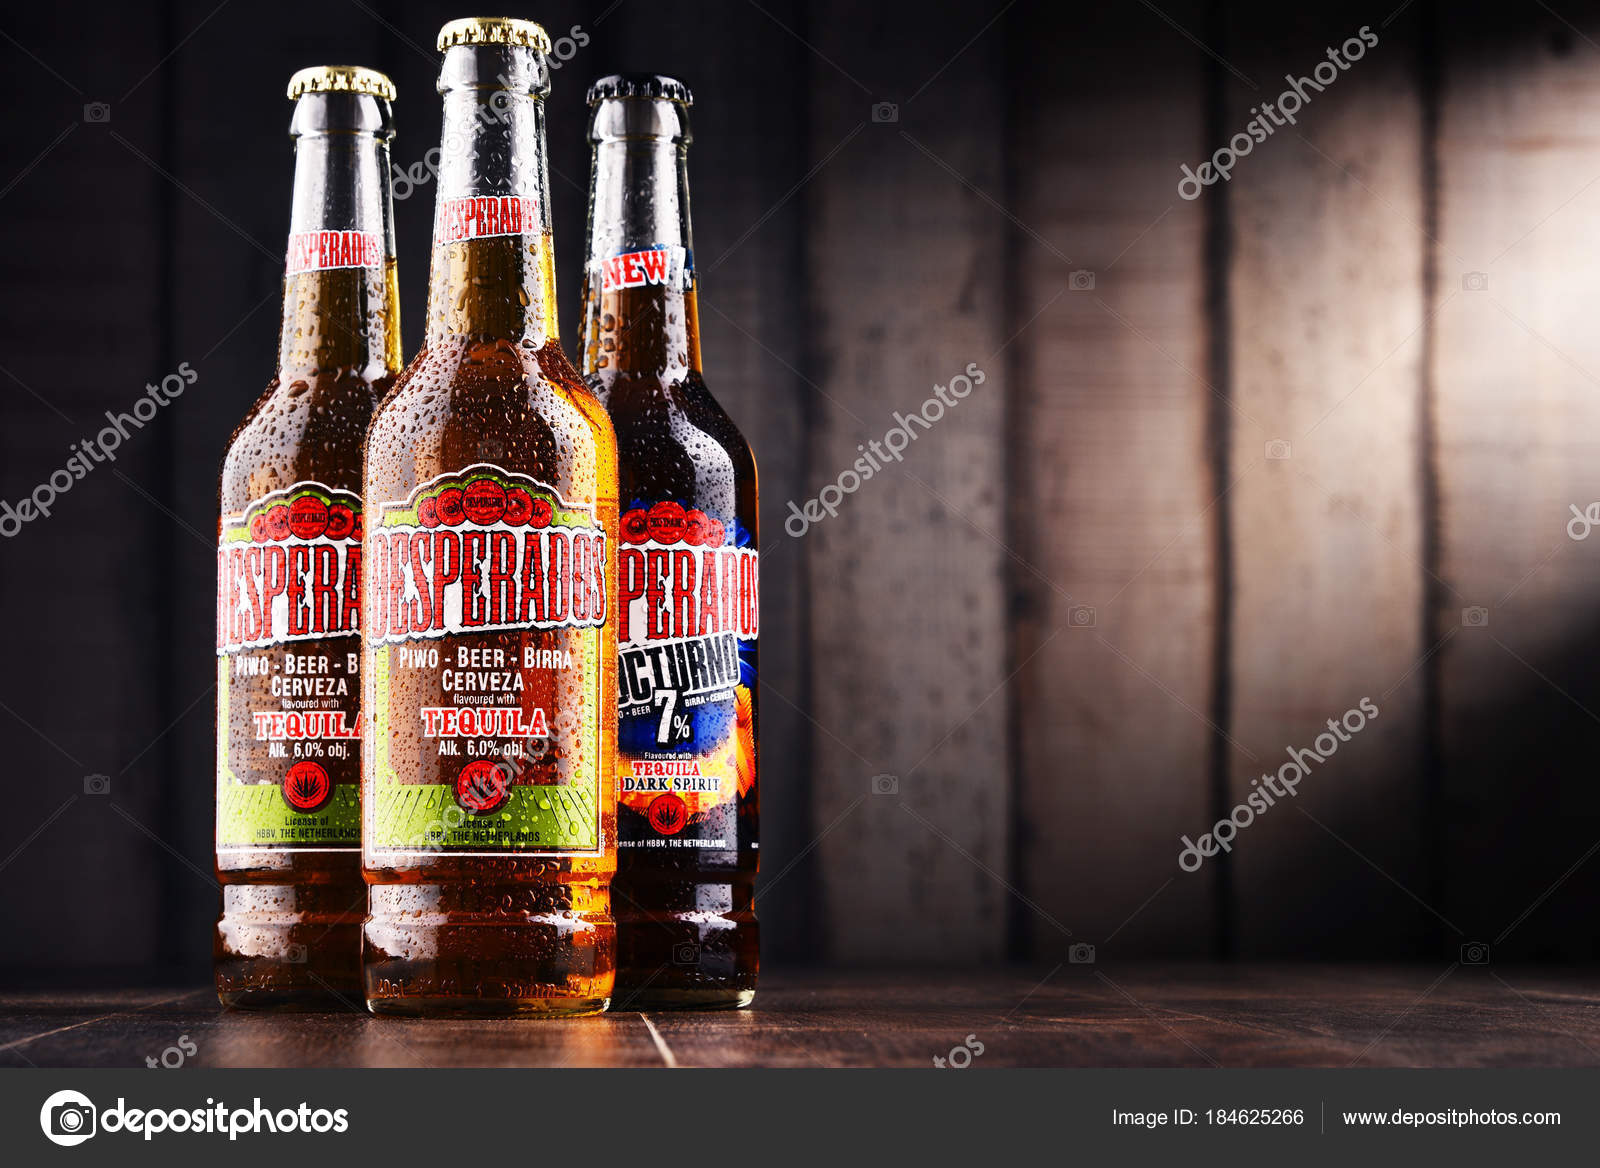 https://st3.depositphotos.com/1063437/18462/i/1600/depositphotos_184625266-stock-photo-three-bottles-of-desperados-beer.jpg